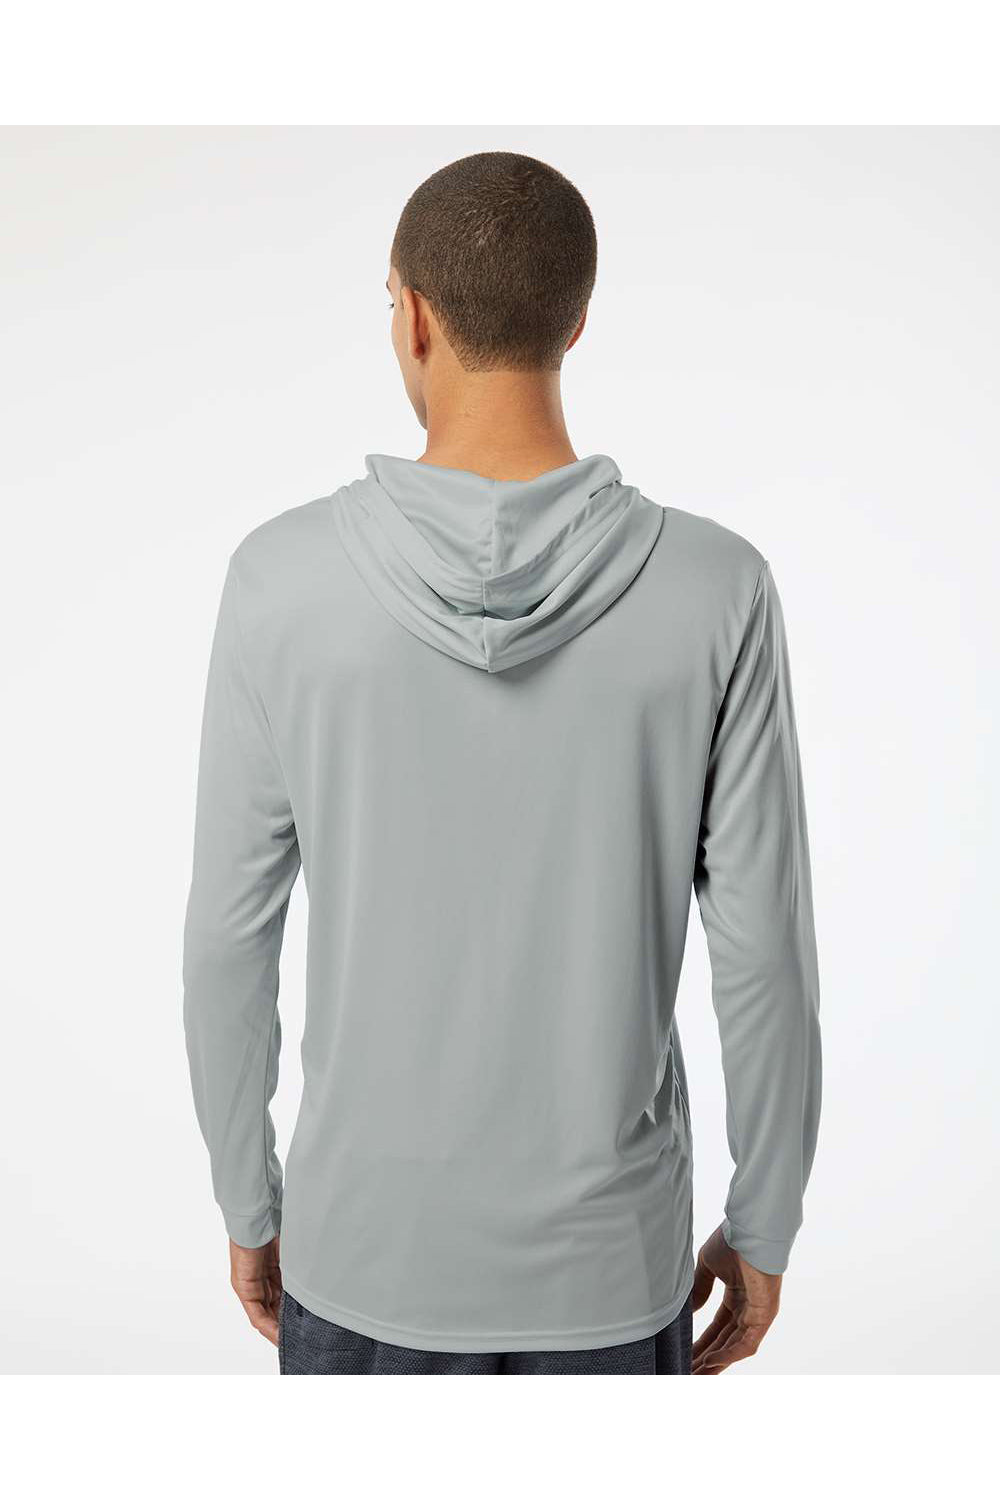 Paragon 220 Mens Bahama Performance Long Sleeve Hooded T-Shirt Hoodie Medium Grey Model Back